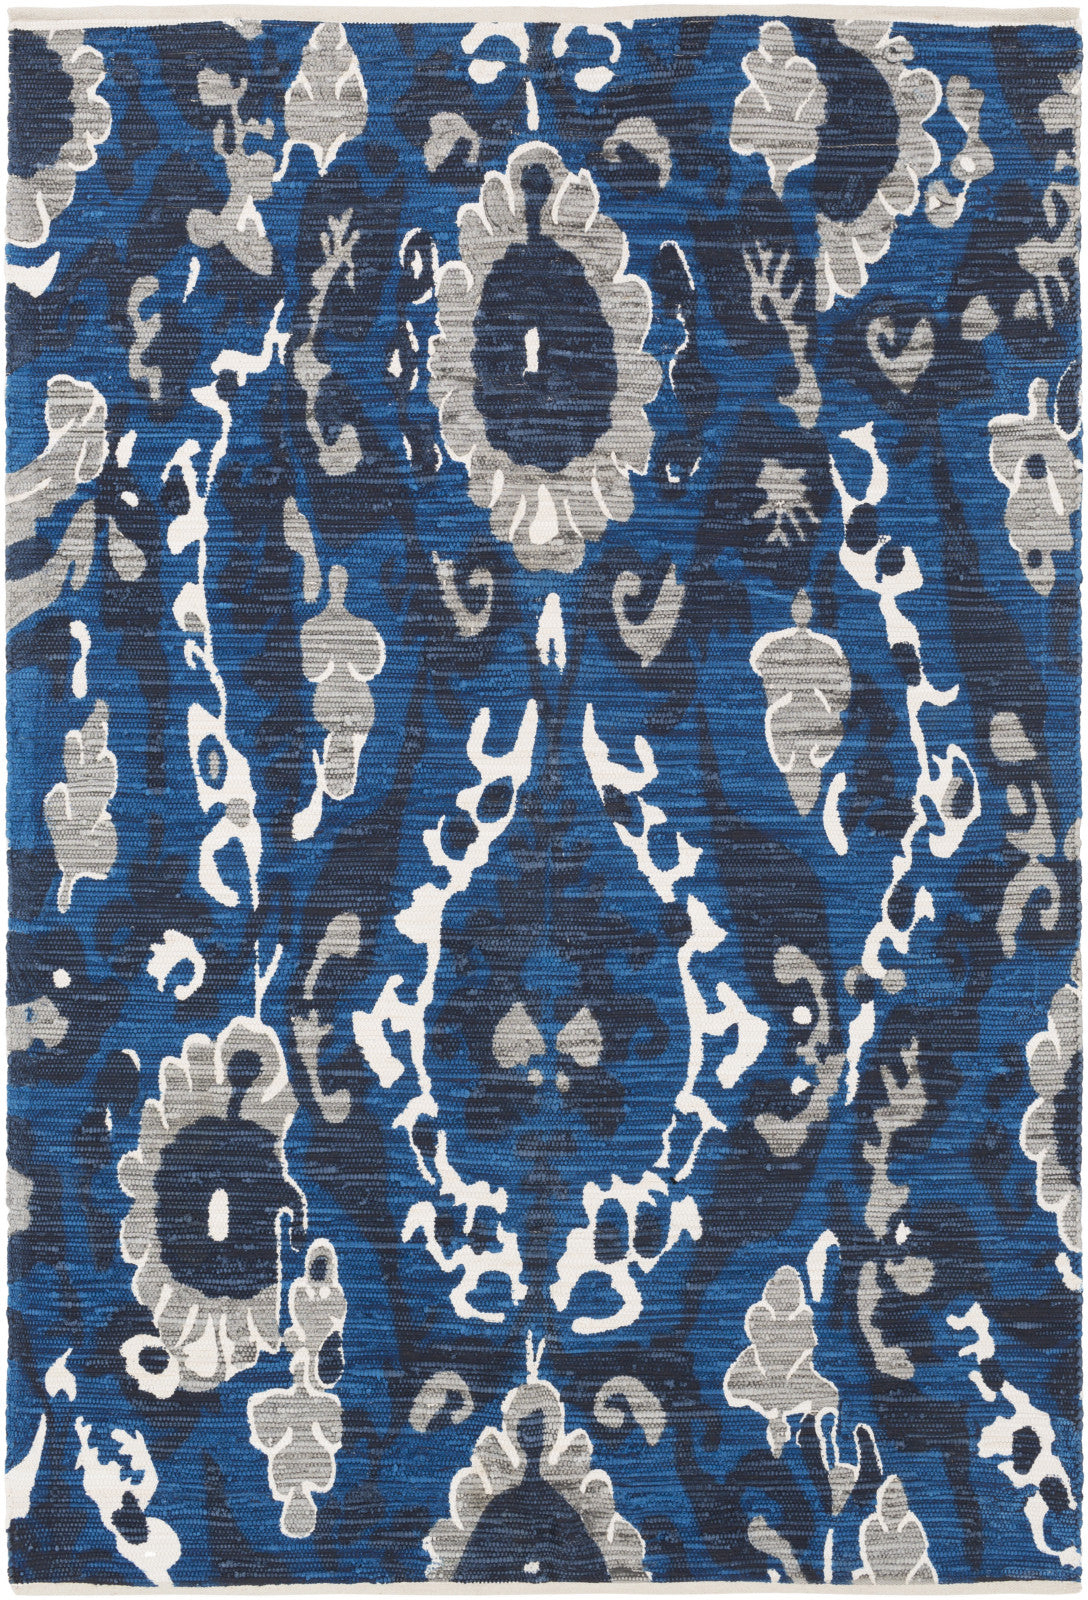 Artistic Weavers Elaine Hudson Royal Blue/Navy Blue Multi Area Rug main image